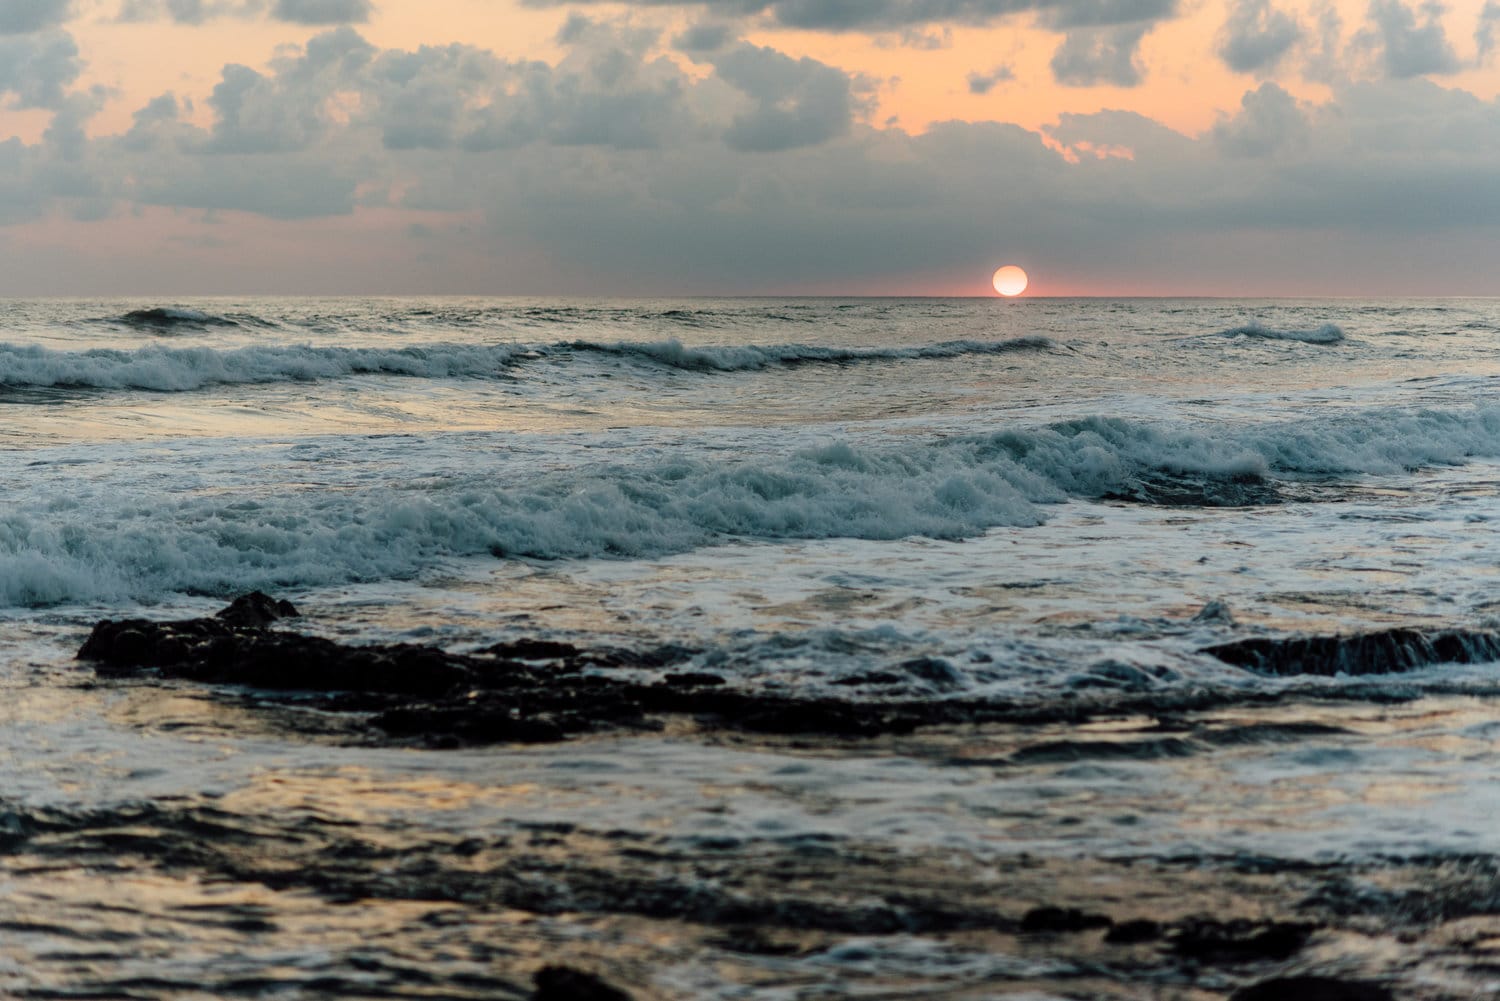 Landscape of ocean waves and sun at sunset in Santa Teresa, Costa Rica.